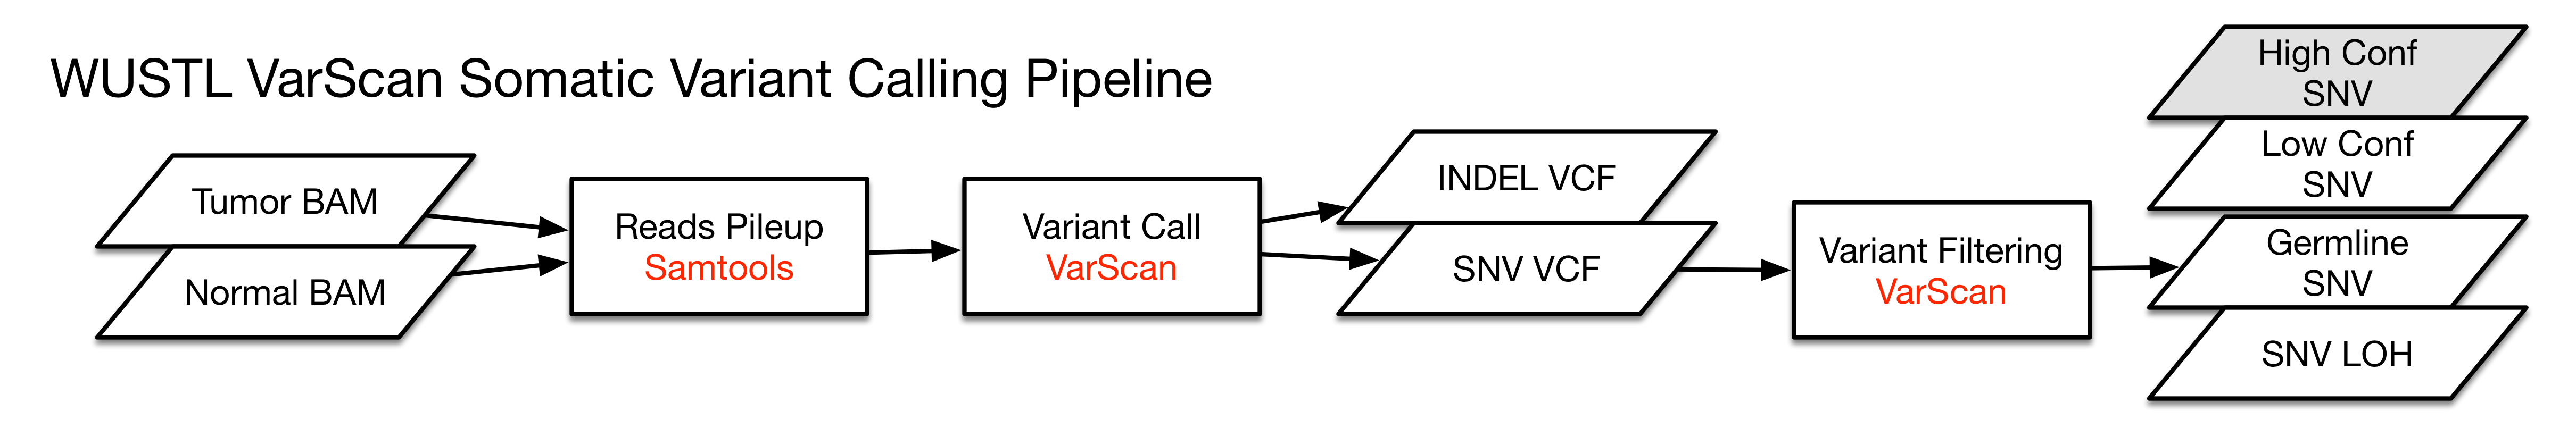 VarScan Somatic Variant Calling Pipeline